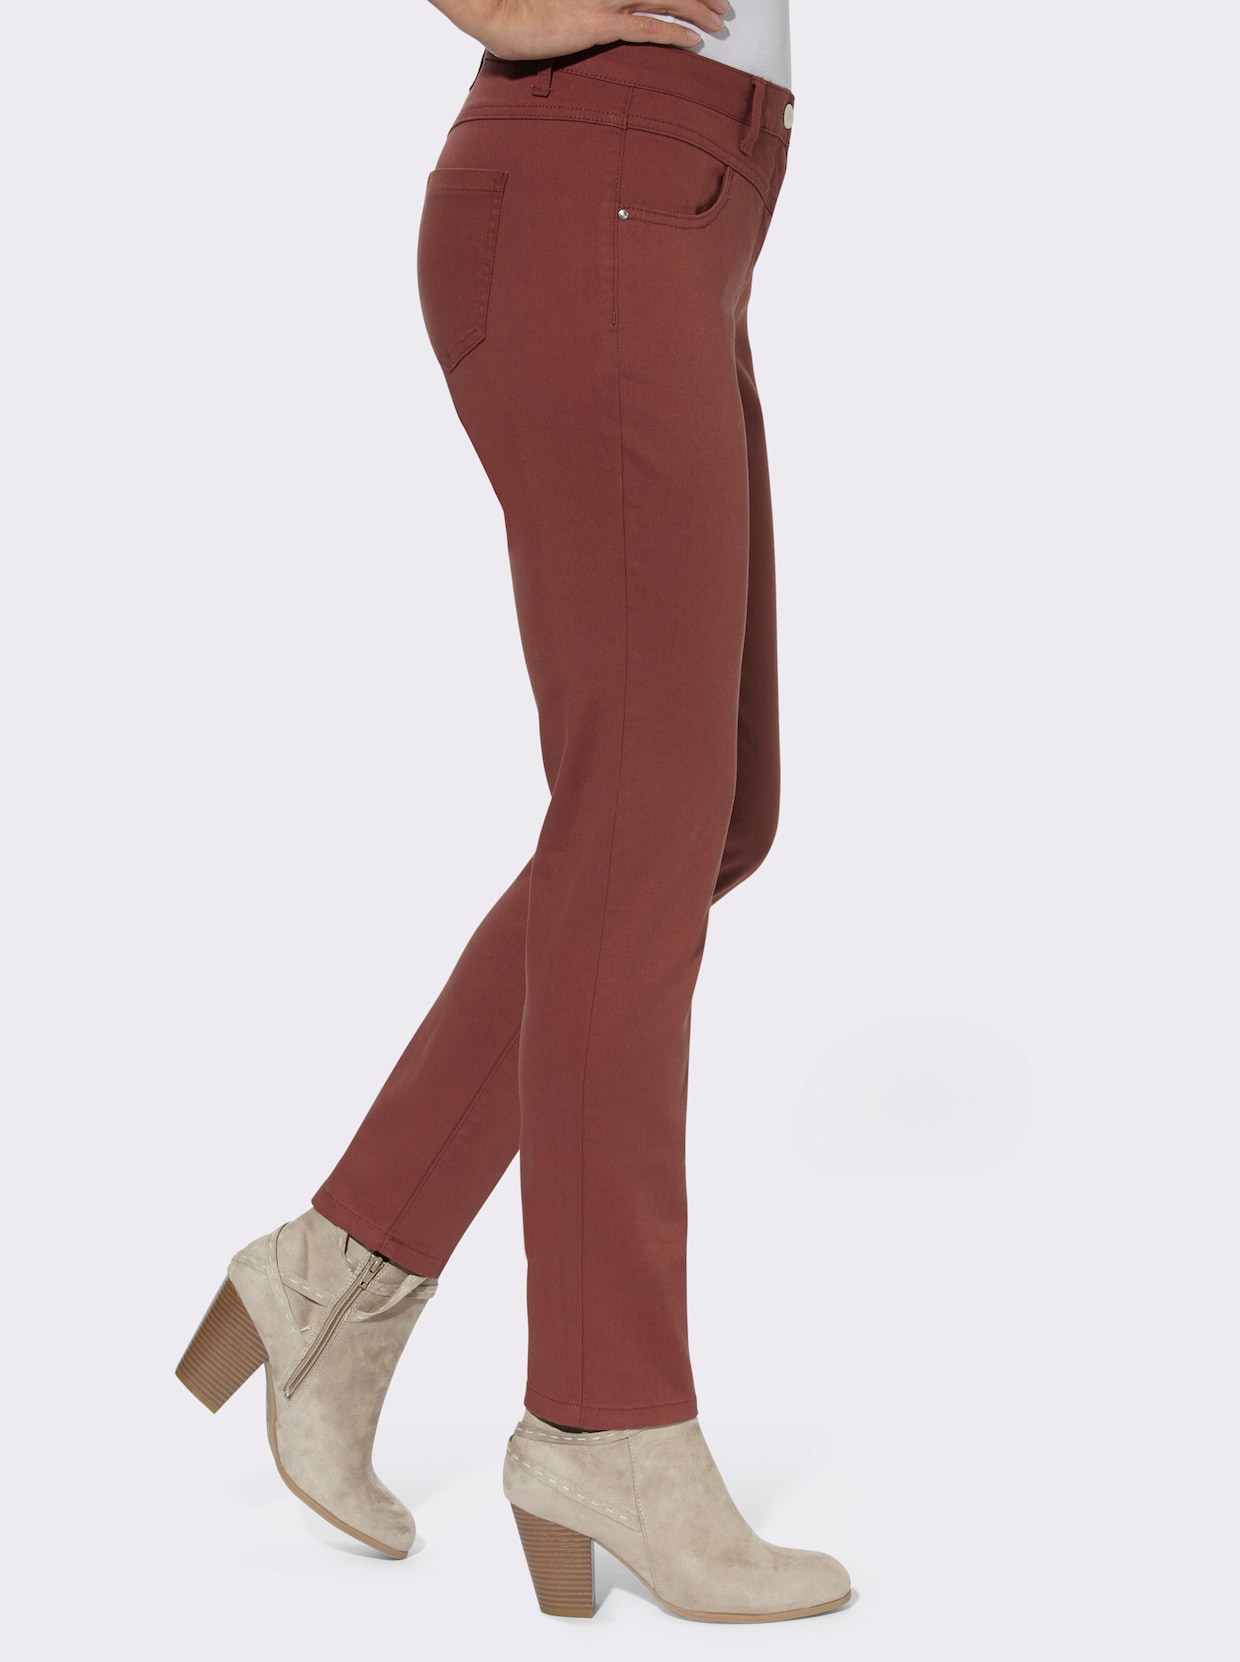 pantalon extensible - marron rouge